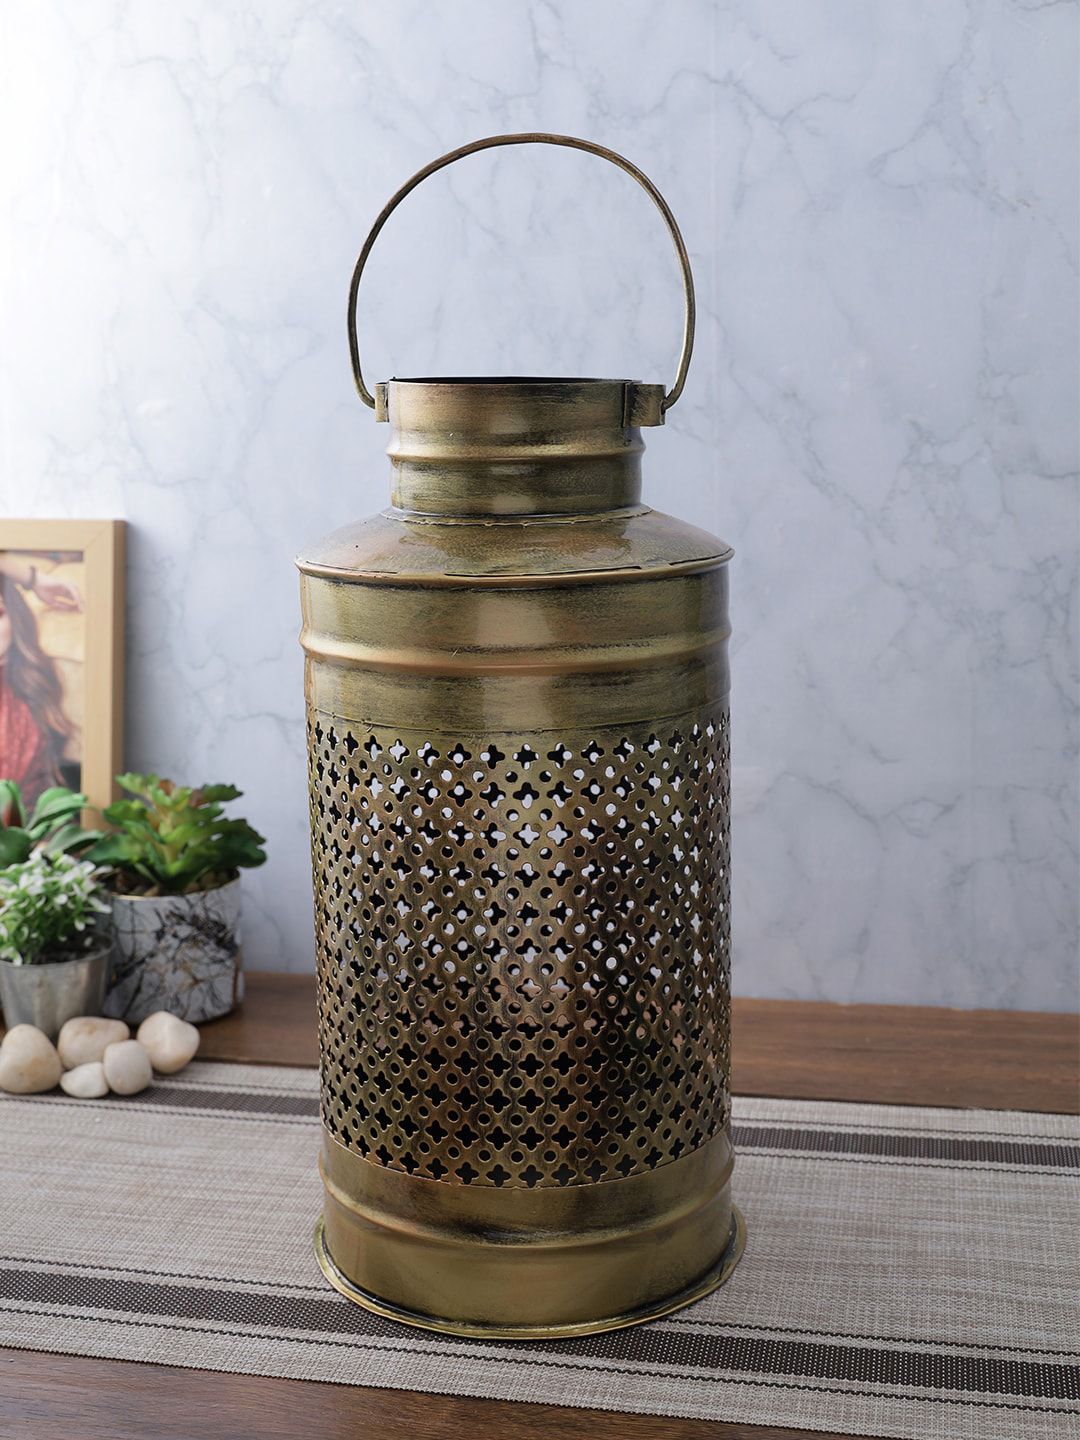 Aapno Rajasthan Gold-Toned Patterned Metal Flower Vase Price in India